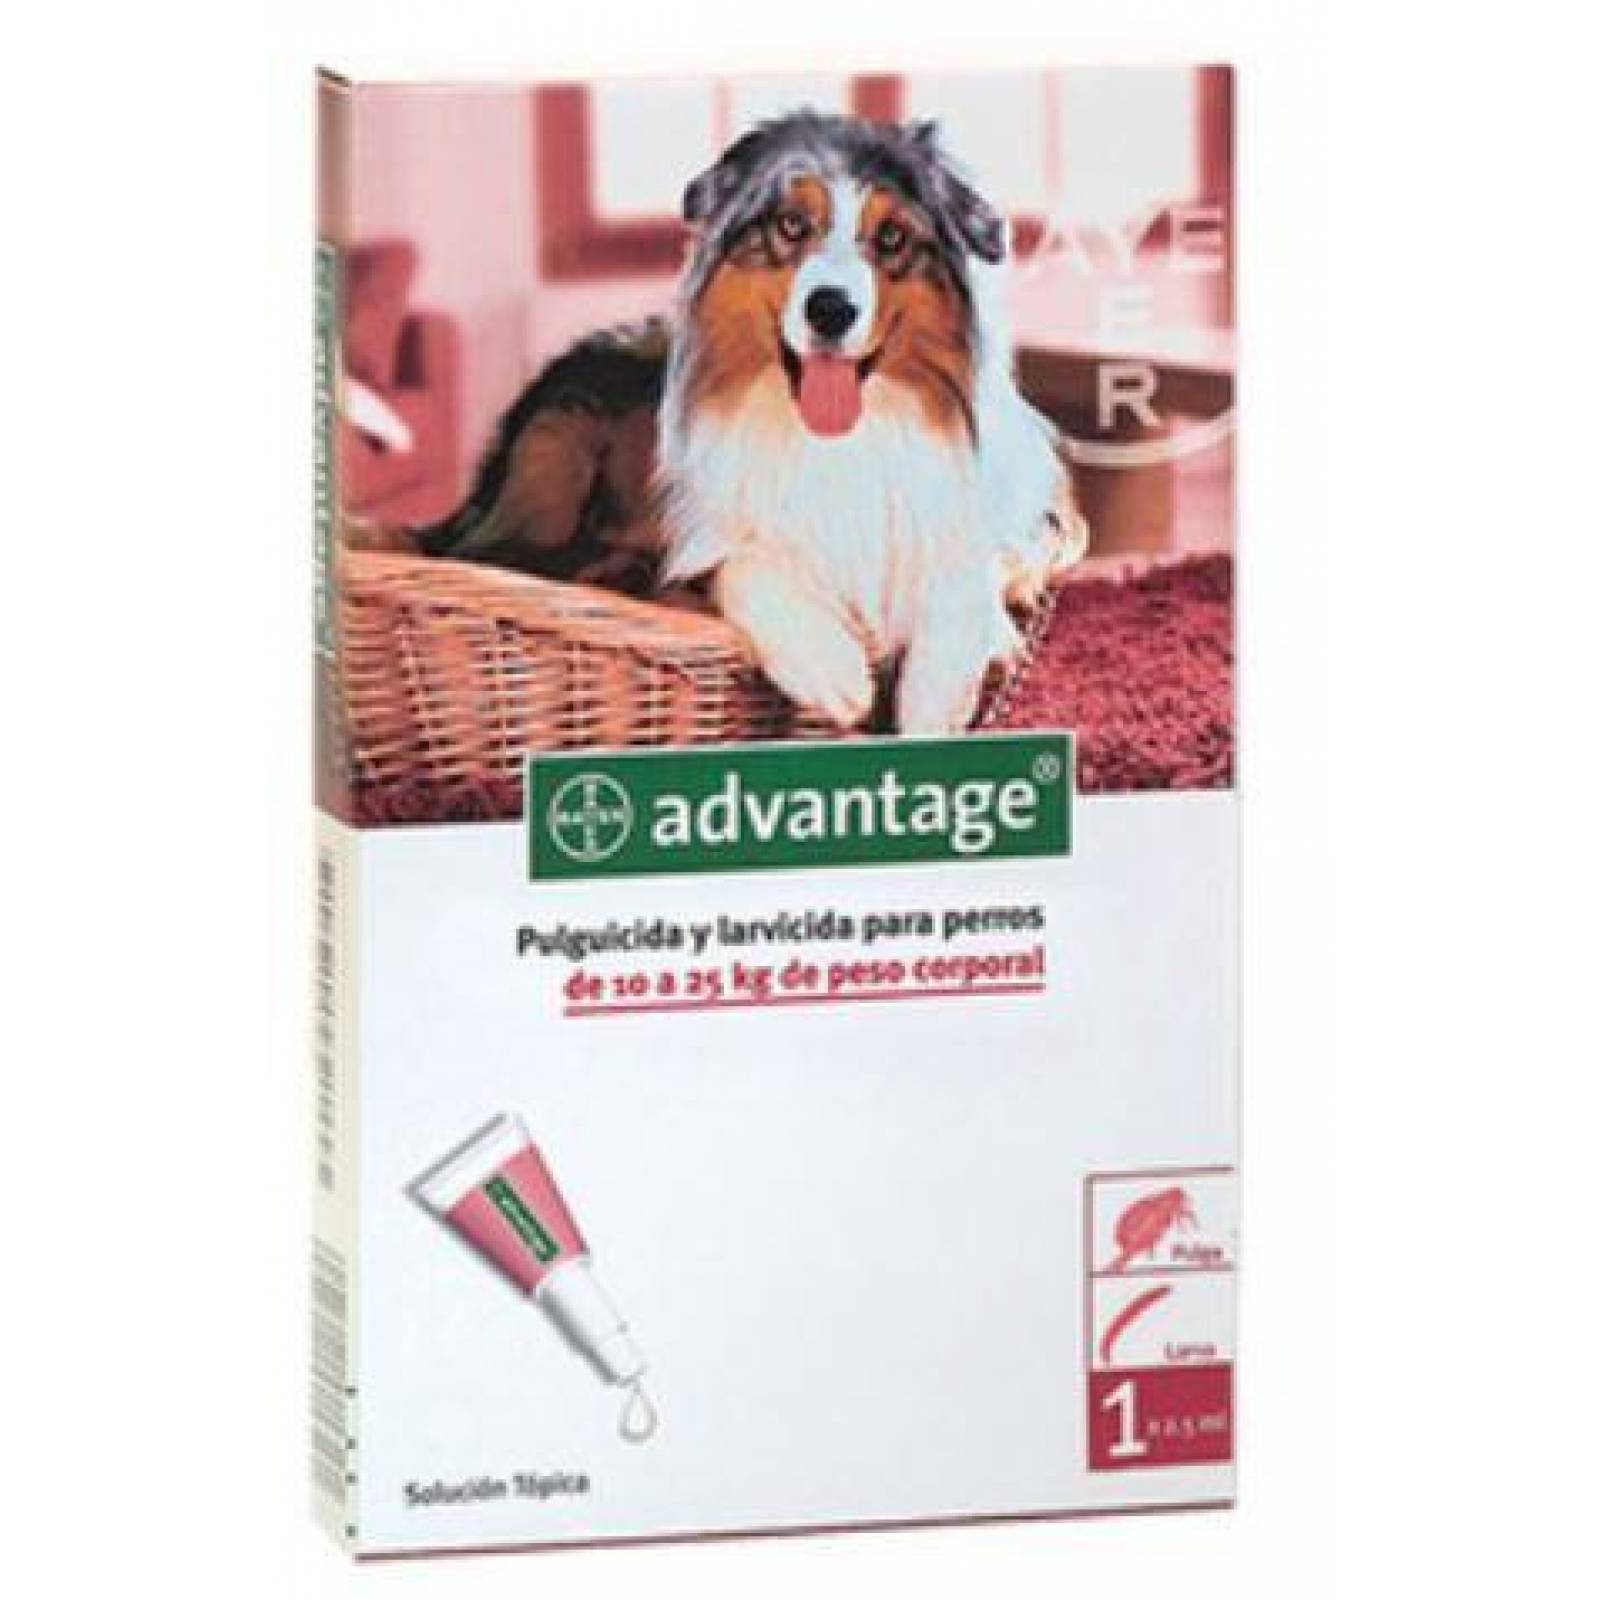 ADVANTAGE Antipulgas para Perros Solución Tópica pipeta de 2.5 ML